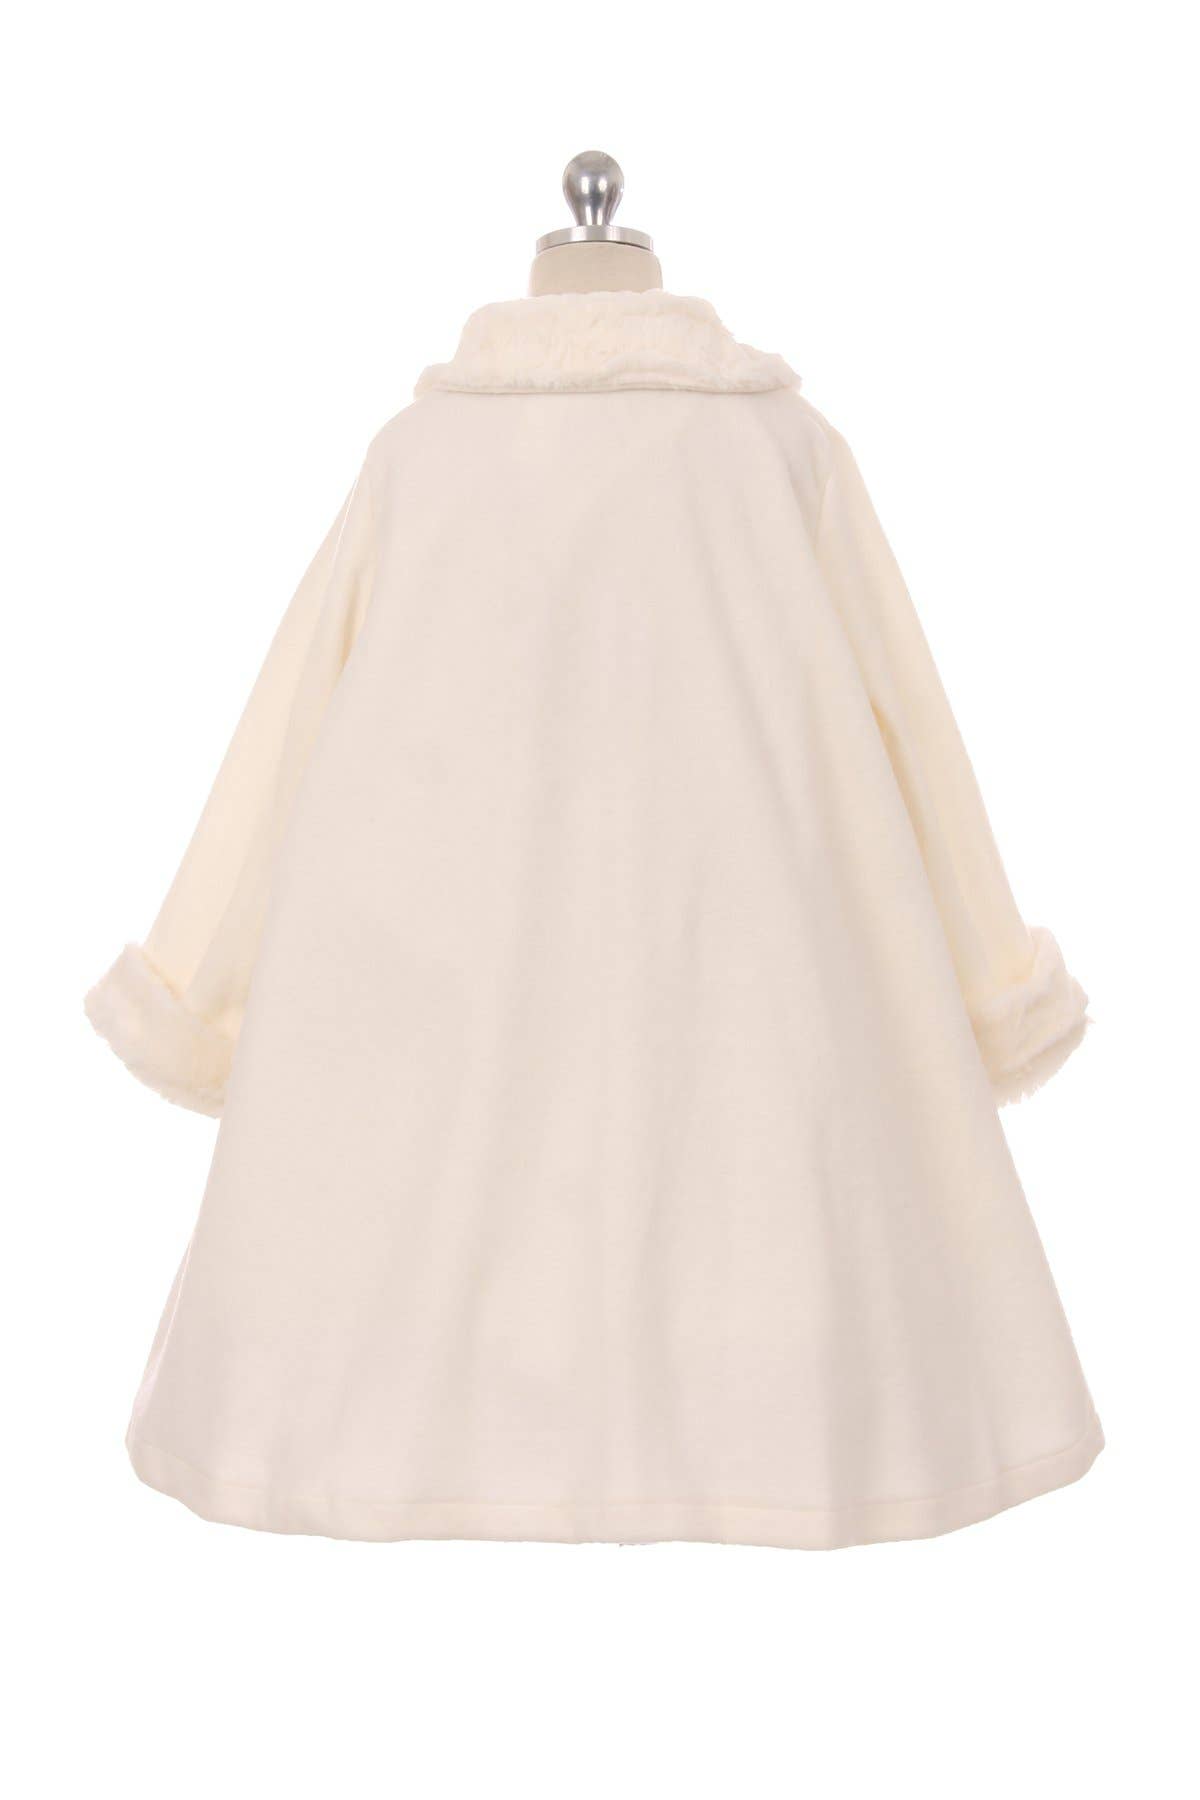 Kid's Dream Fleece Style Coat